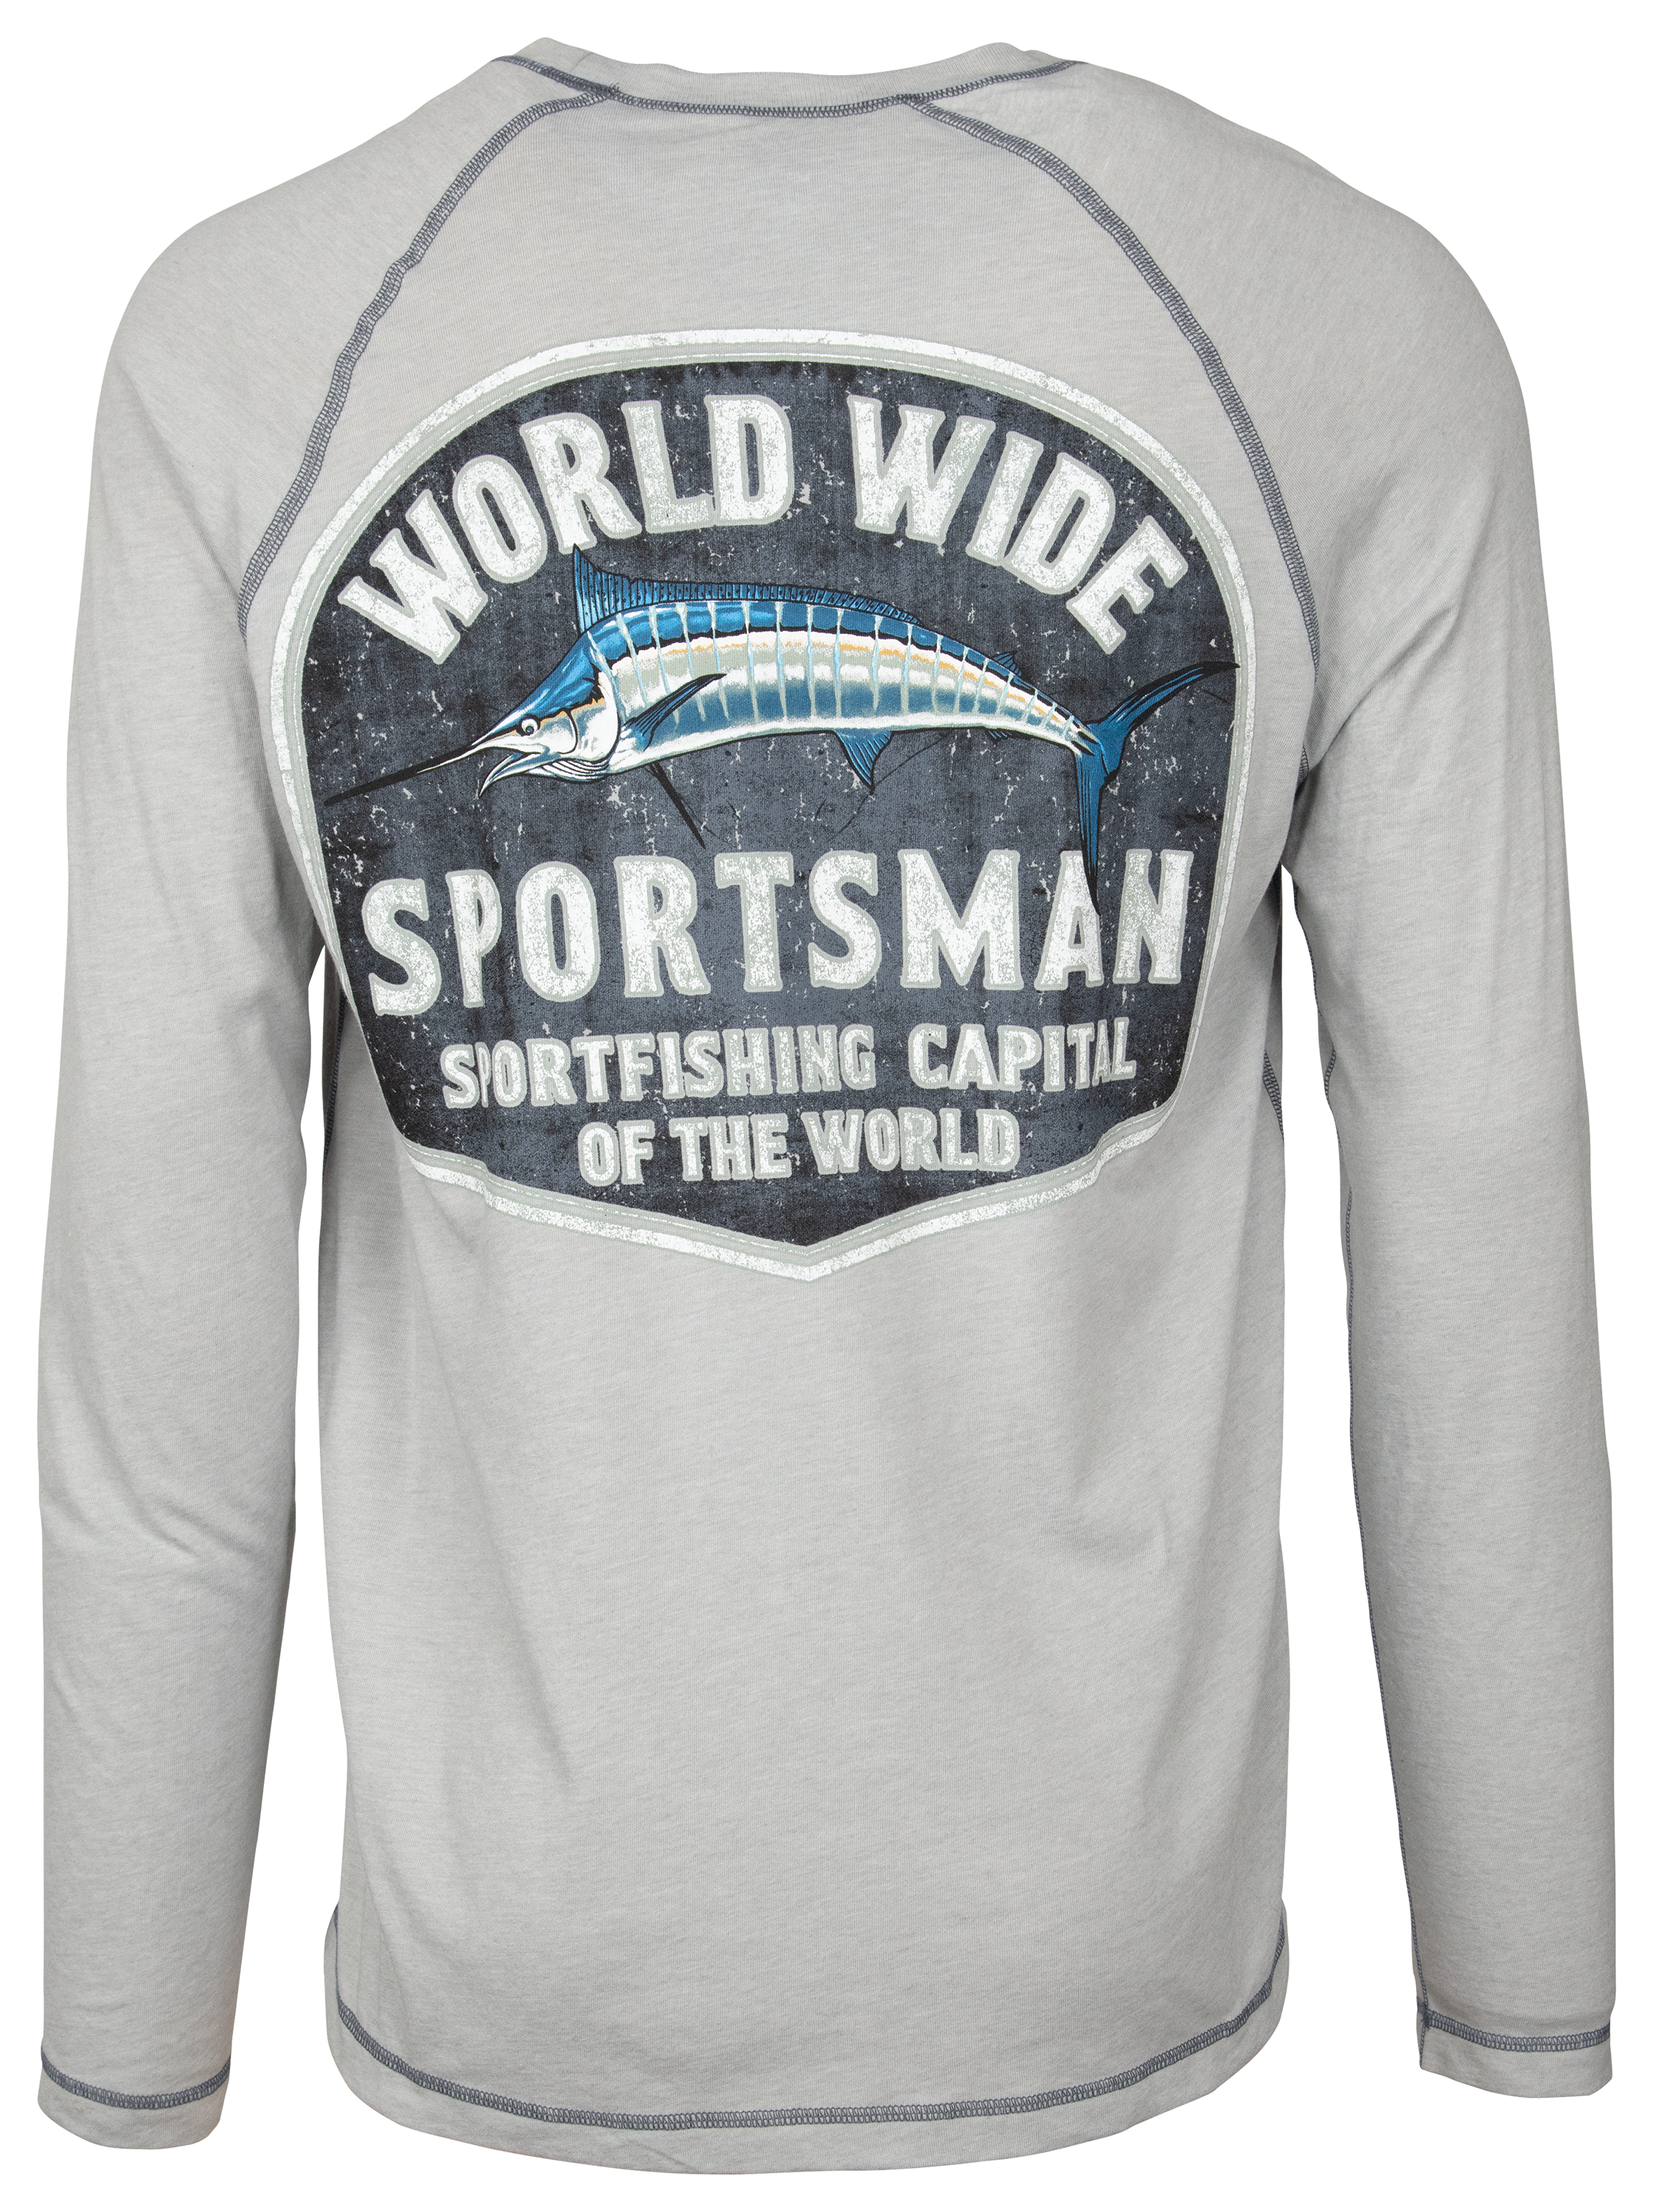 World Wide Sportsman Freecast Short-Sleeve Shirt for Men